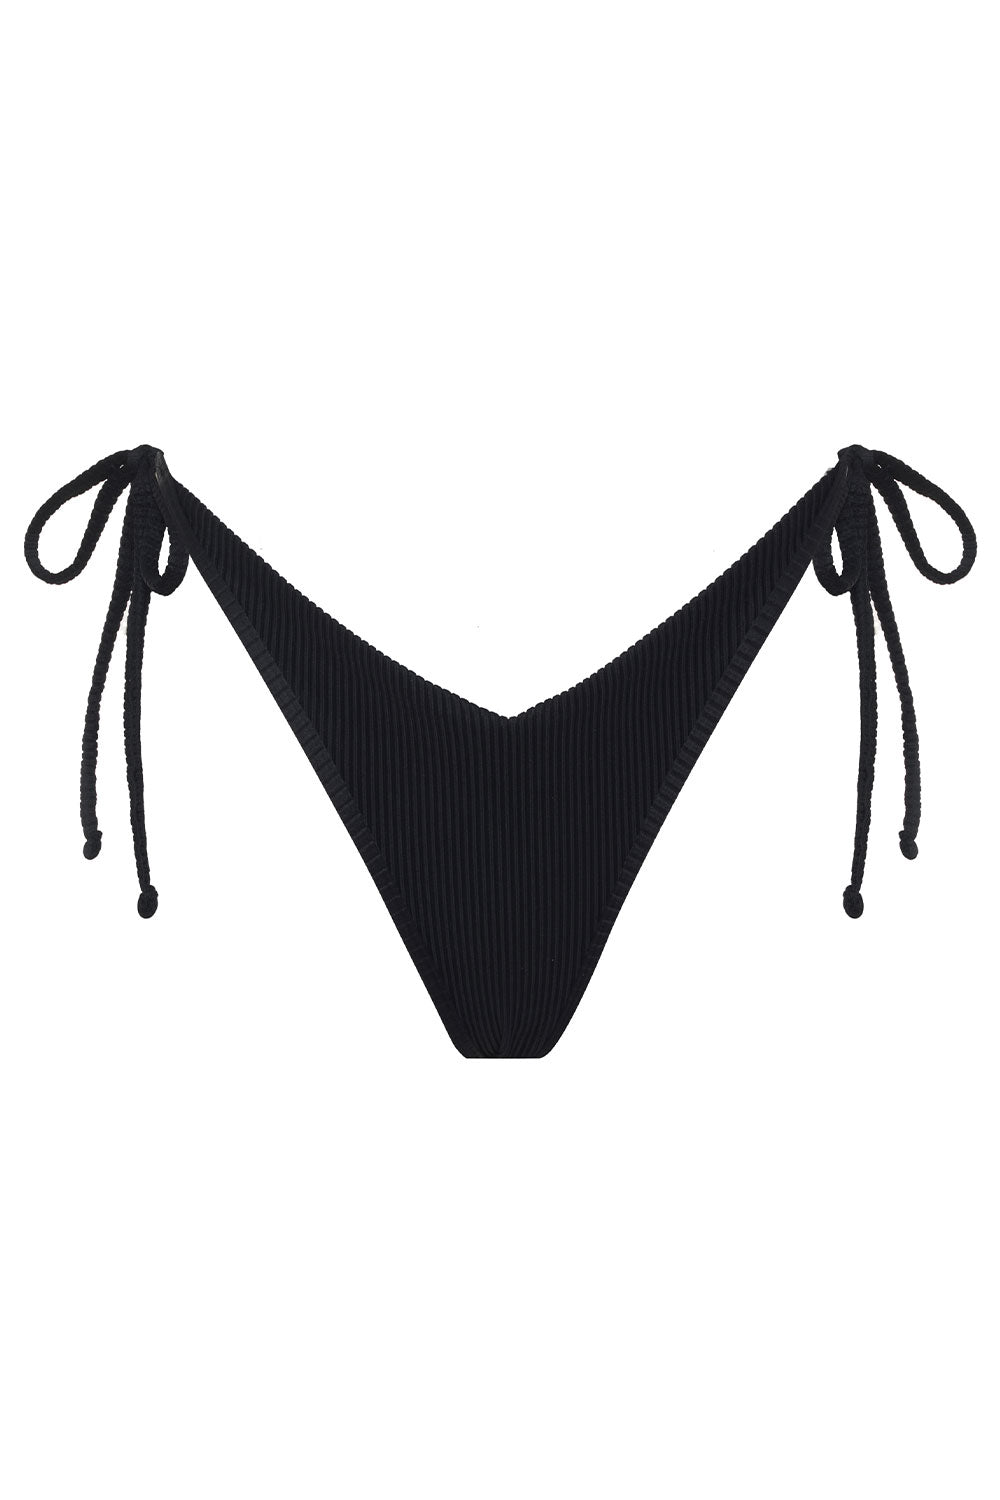 Adjustable Black Textured Cheeky Bikini Bottom Bottom Cloque Preto